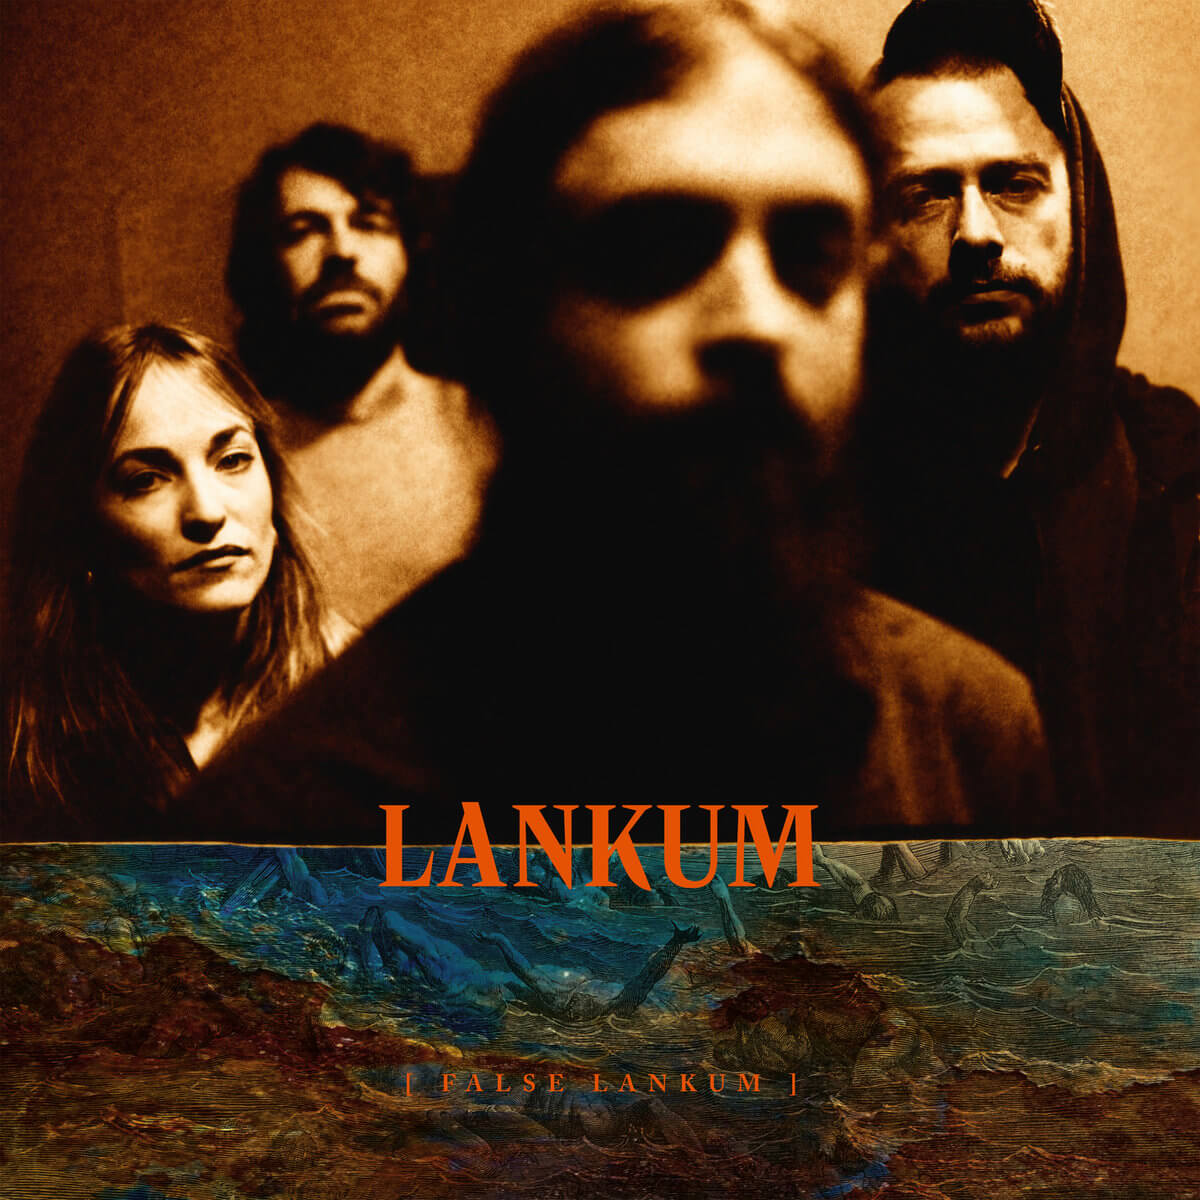 False Lankum by Lankunm album review by Greg Walker for Northern Transmissions